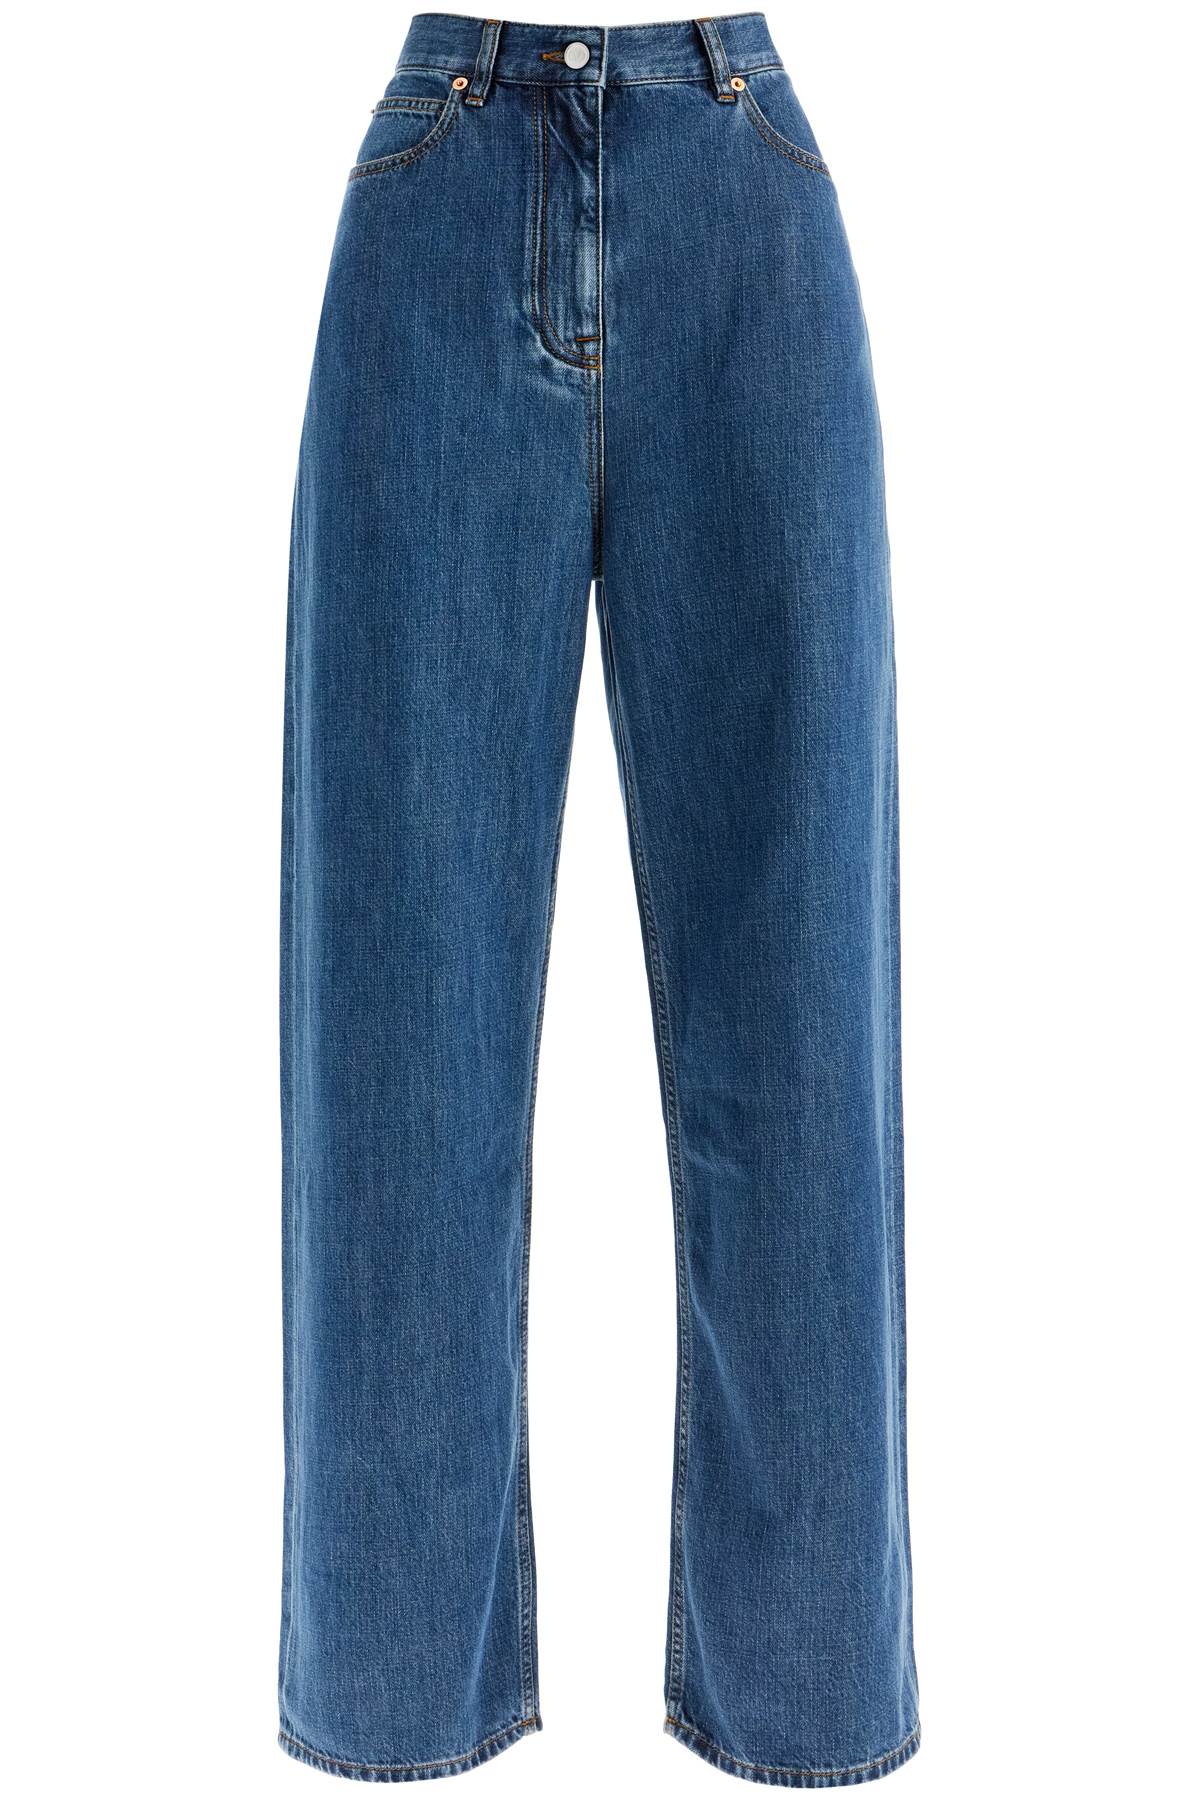 Valentino GARAVANI baggy cotton and lyocell jeans - Blue